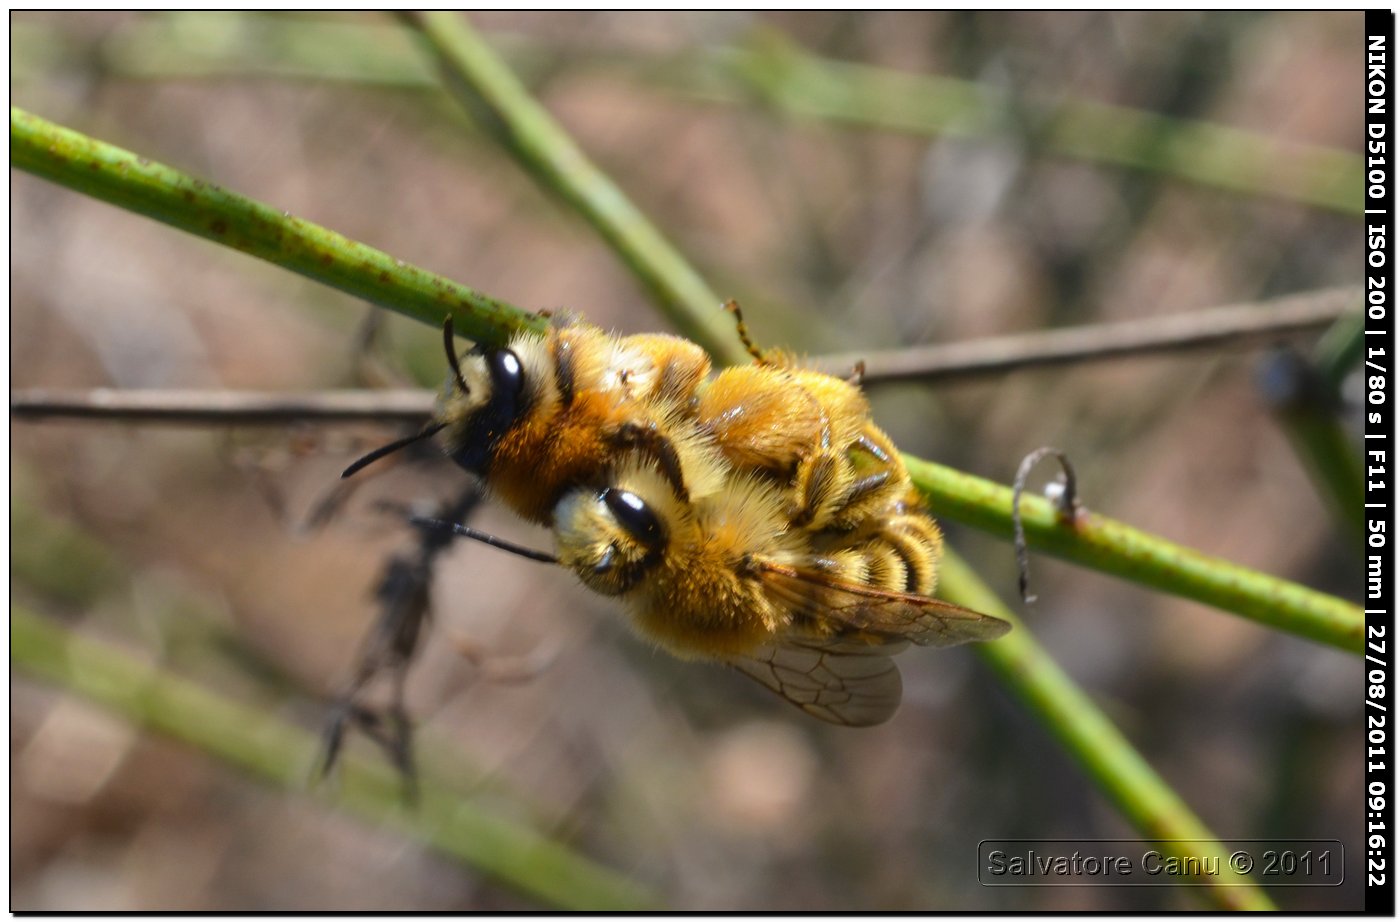 Coppia di Dasypoda hirtipes (Apidae Melittinae)